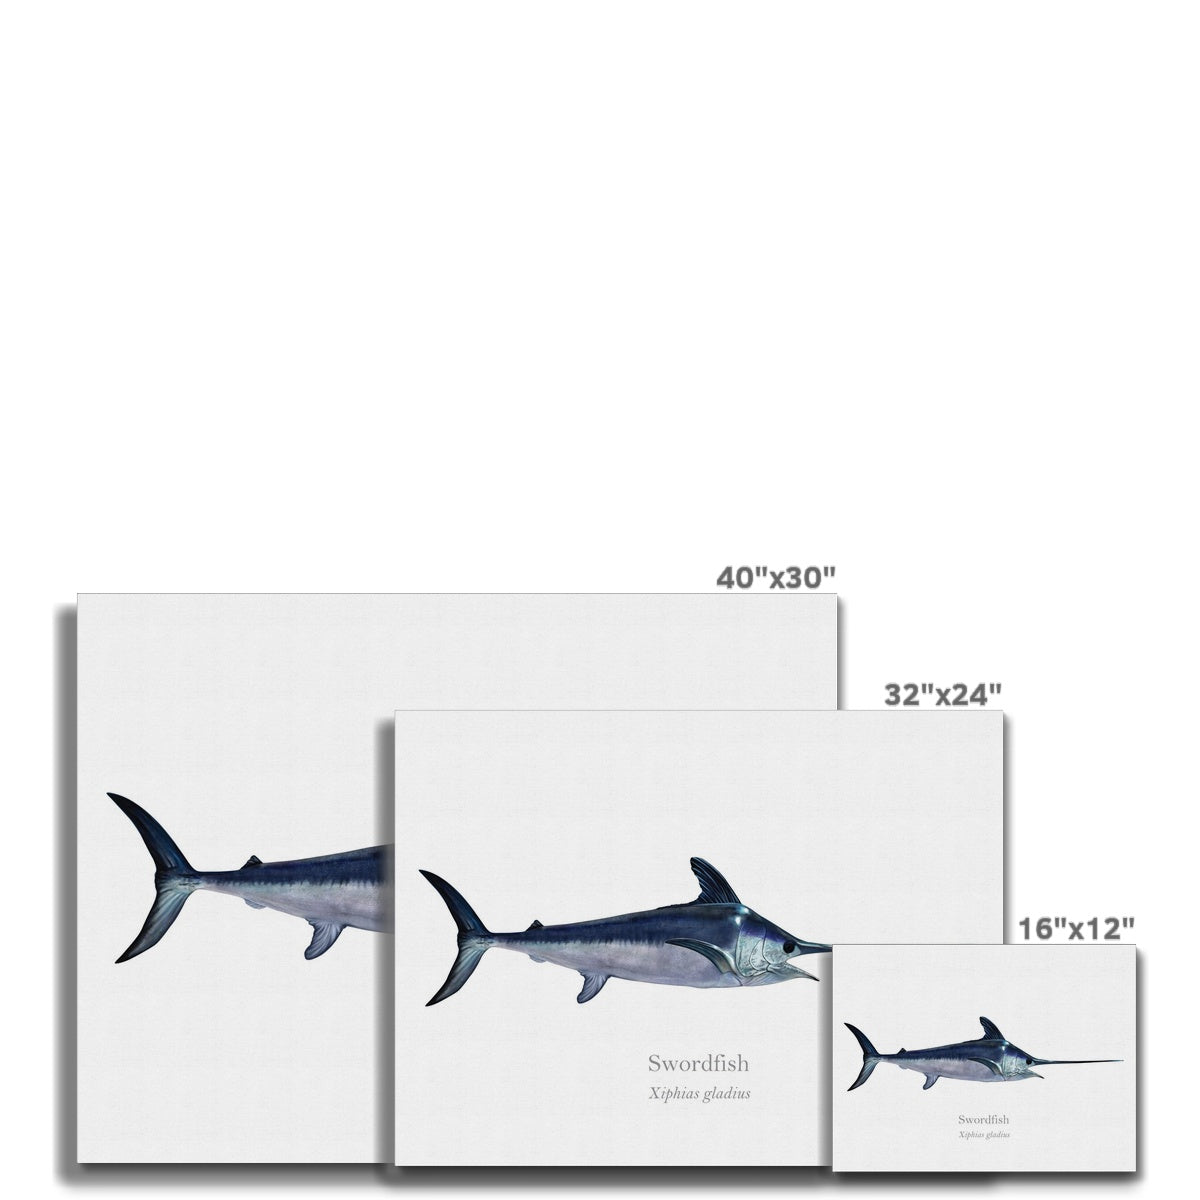 Swordfish - Canvas Print - With Scientific Name - madfishlab.com